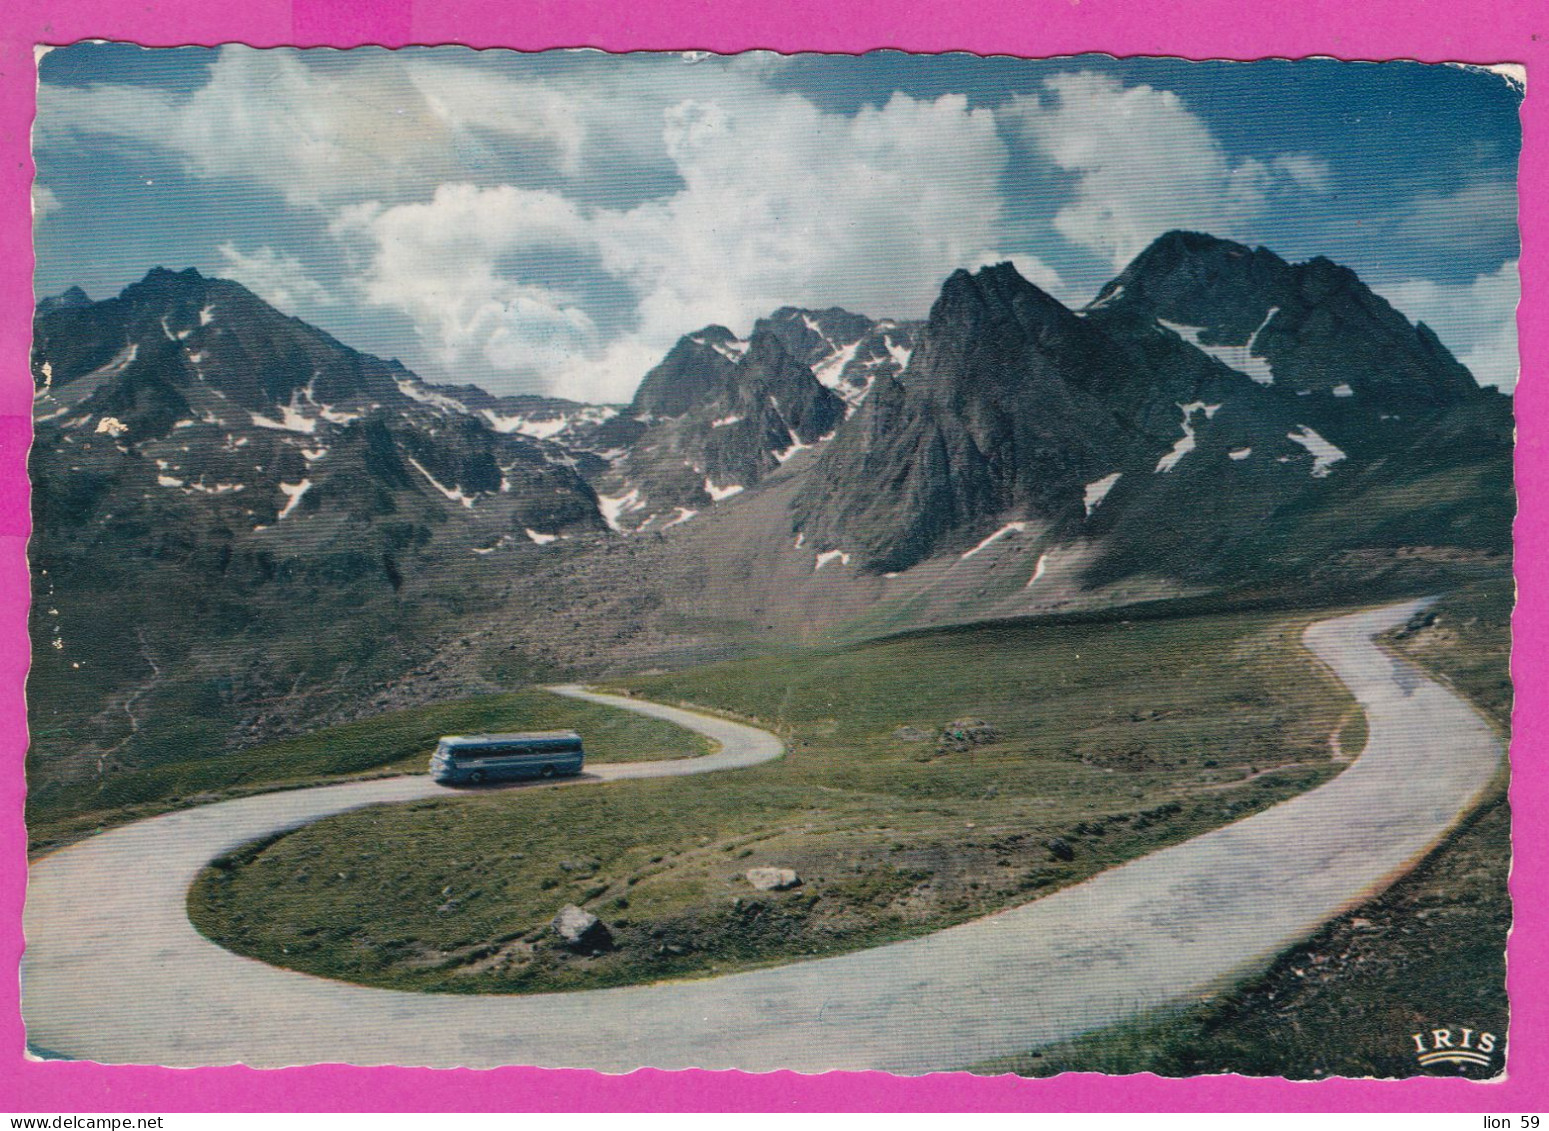 294118 / France - Les Pyrenees Le Col Du Tourmalet 2114 M. PC 1964 USED 0.20 Fr. Semeuse Turquoise Et Rose Flamme LUCHON - Covers & Documents